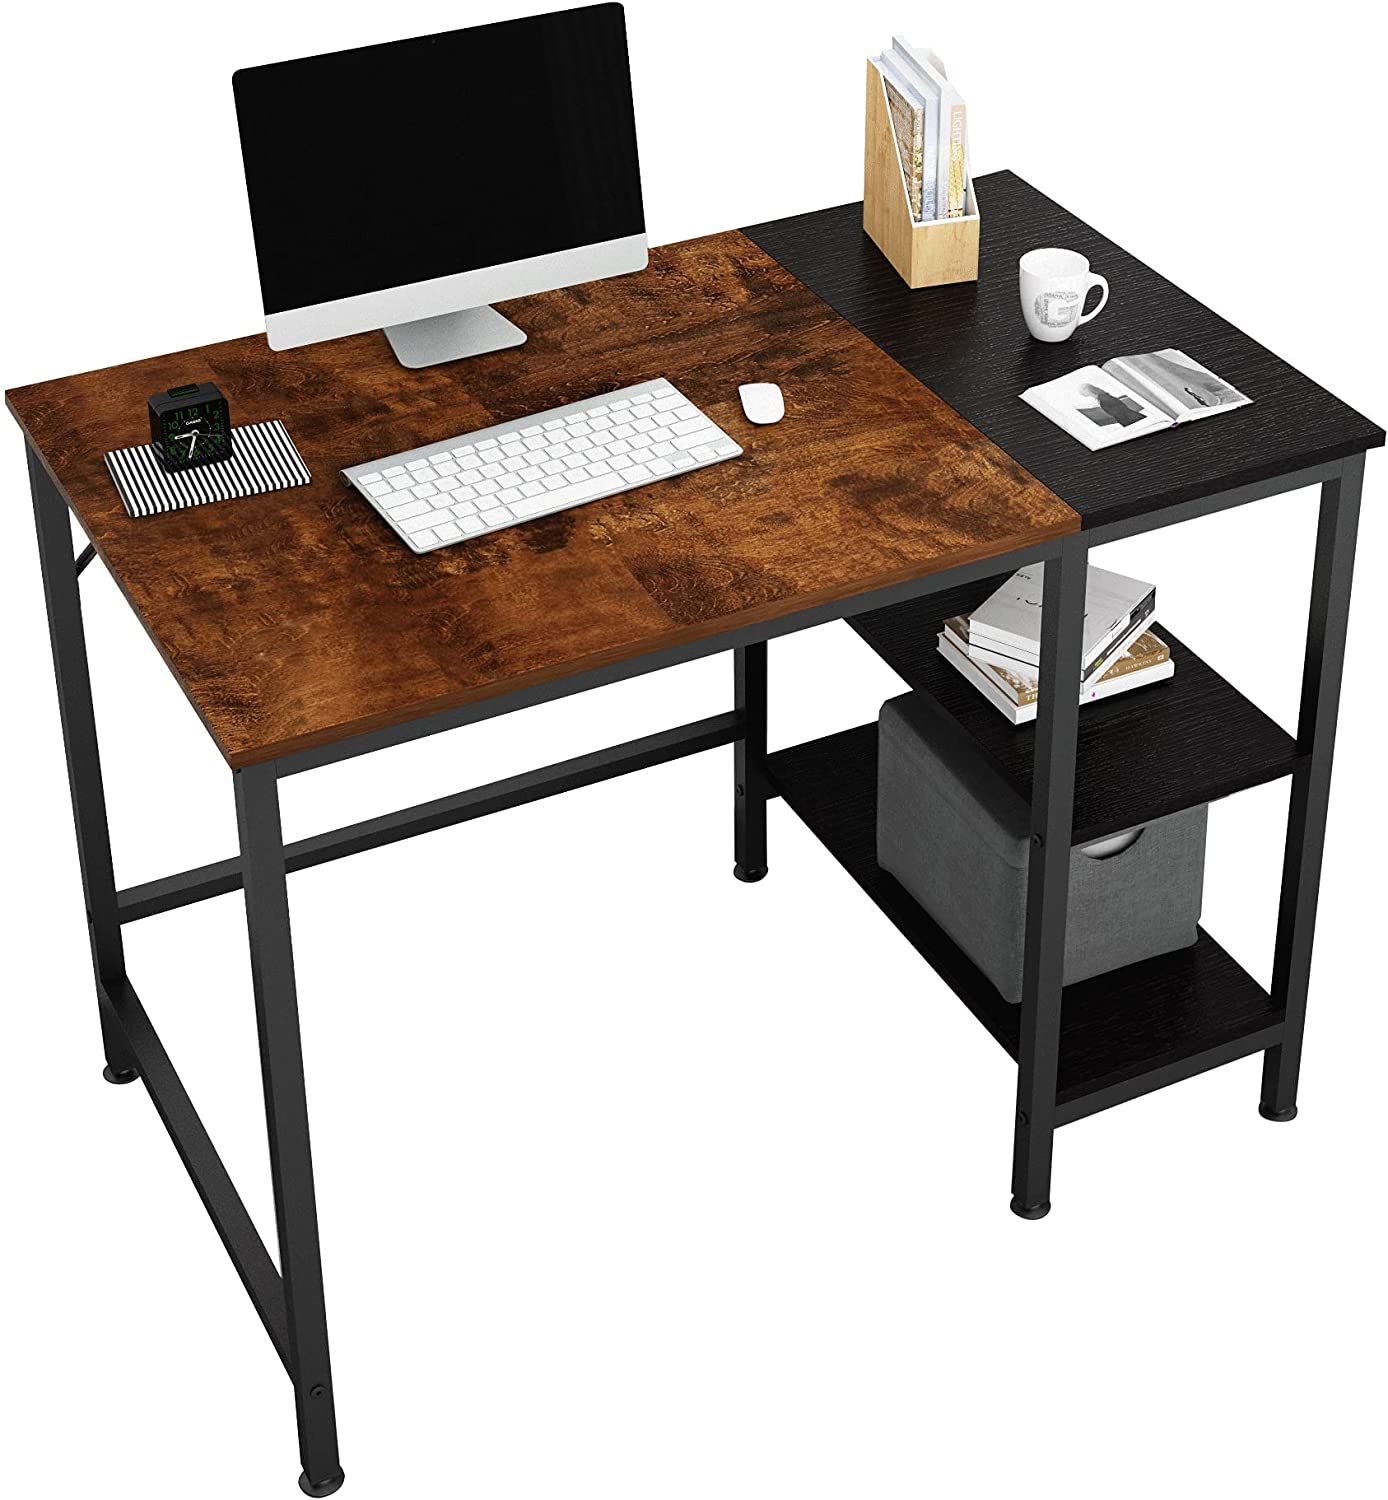 JOISCOPE Under Desk Shelves & Steel Frame Minimalist Desk